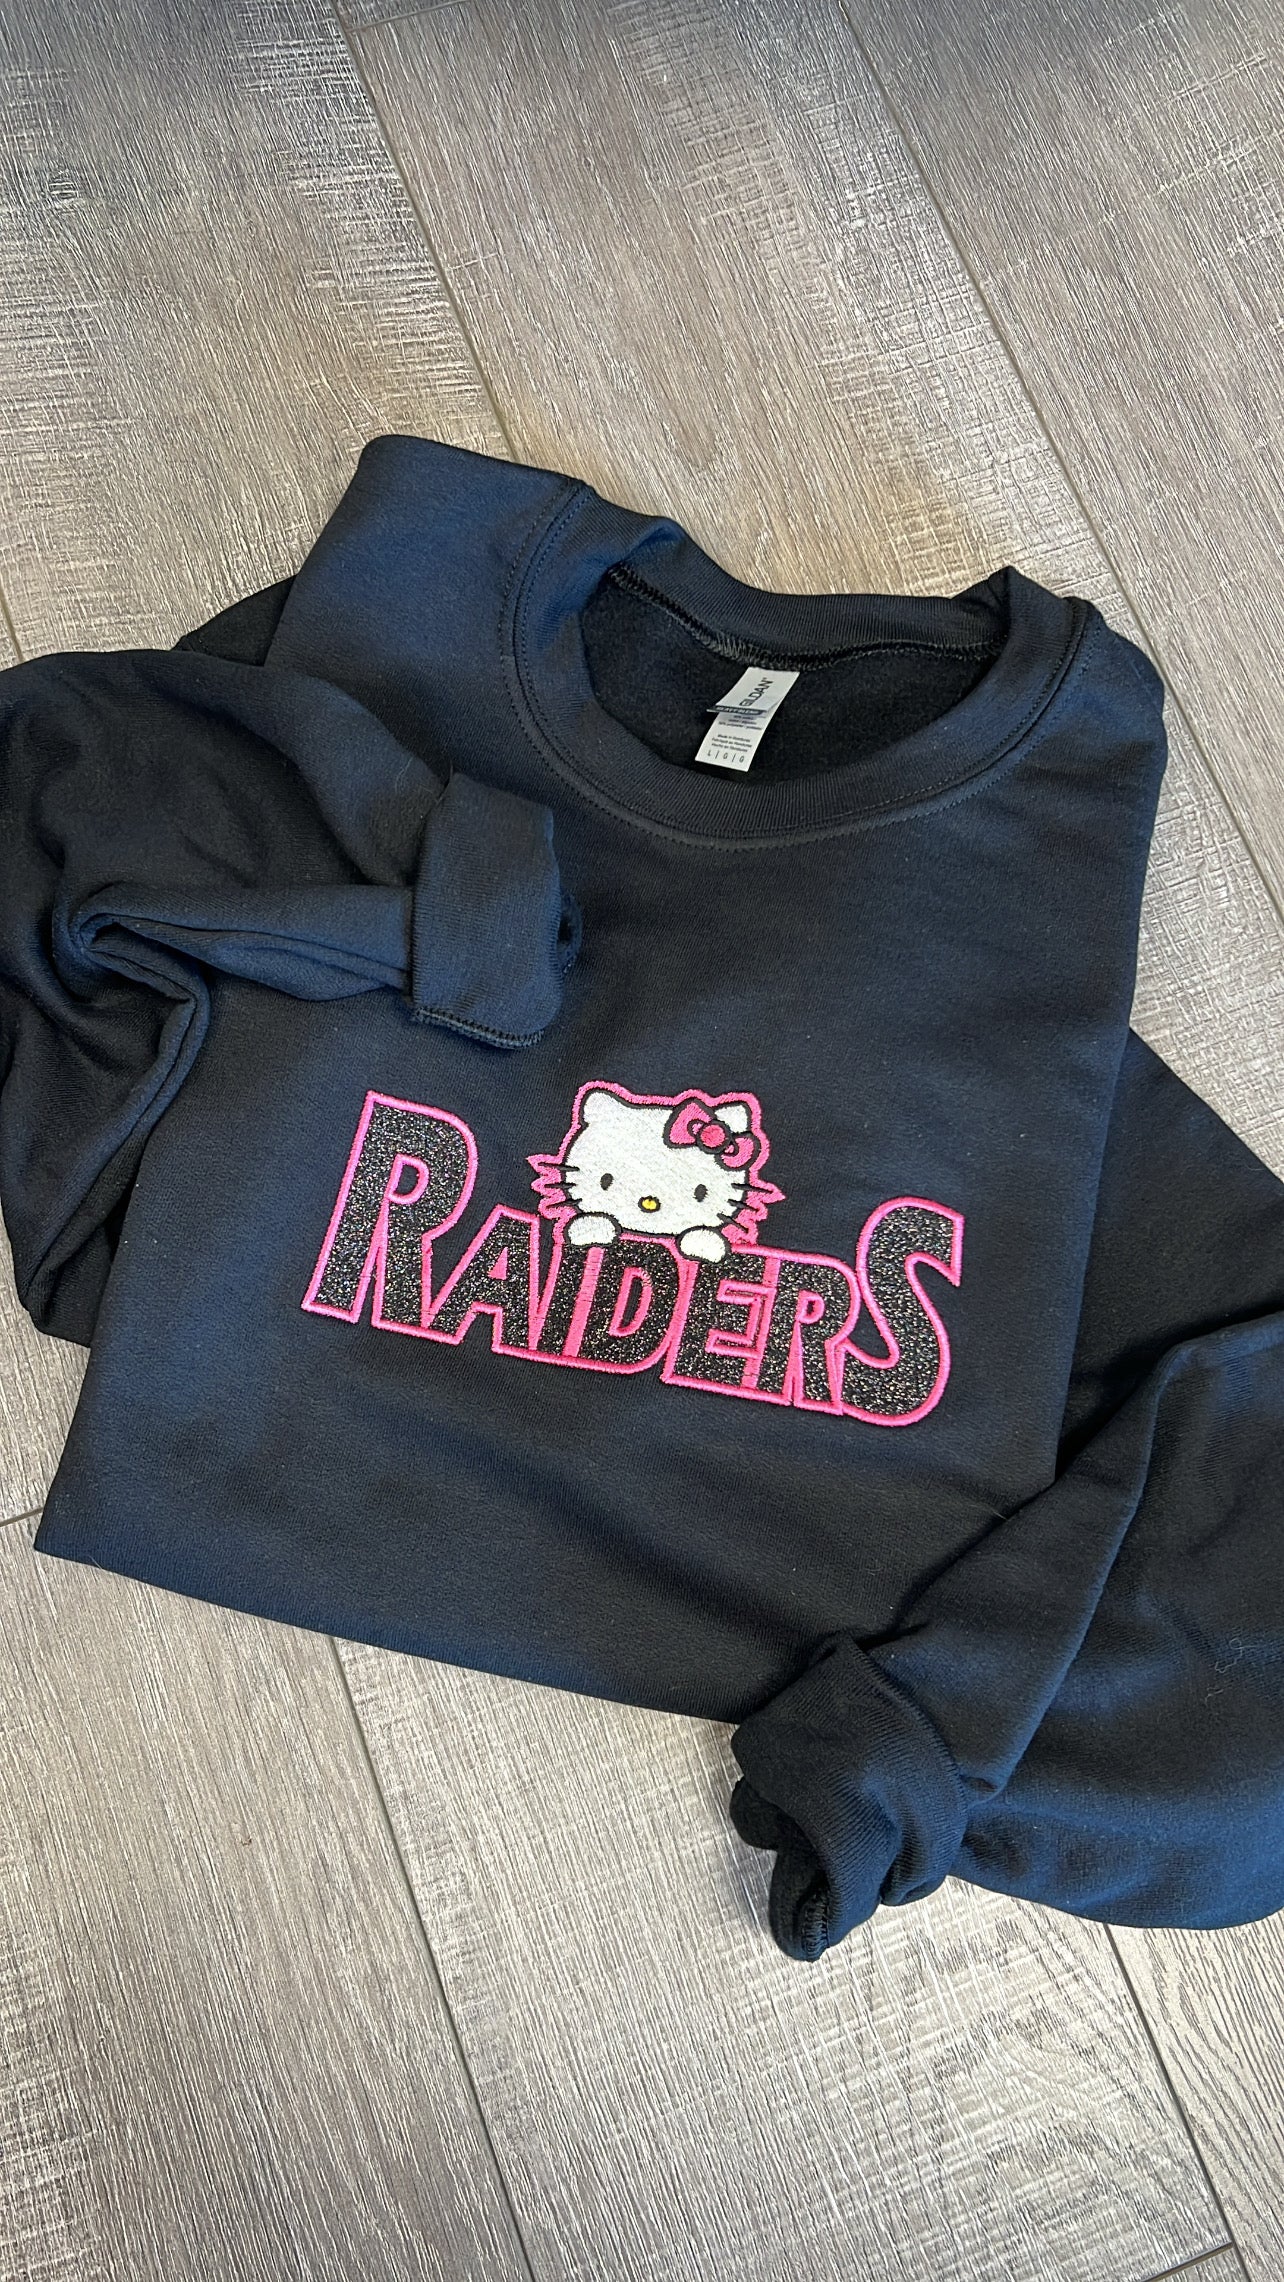 Kitty Raider glitter embroidered crew sweatshirt